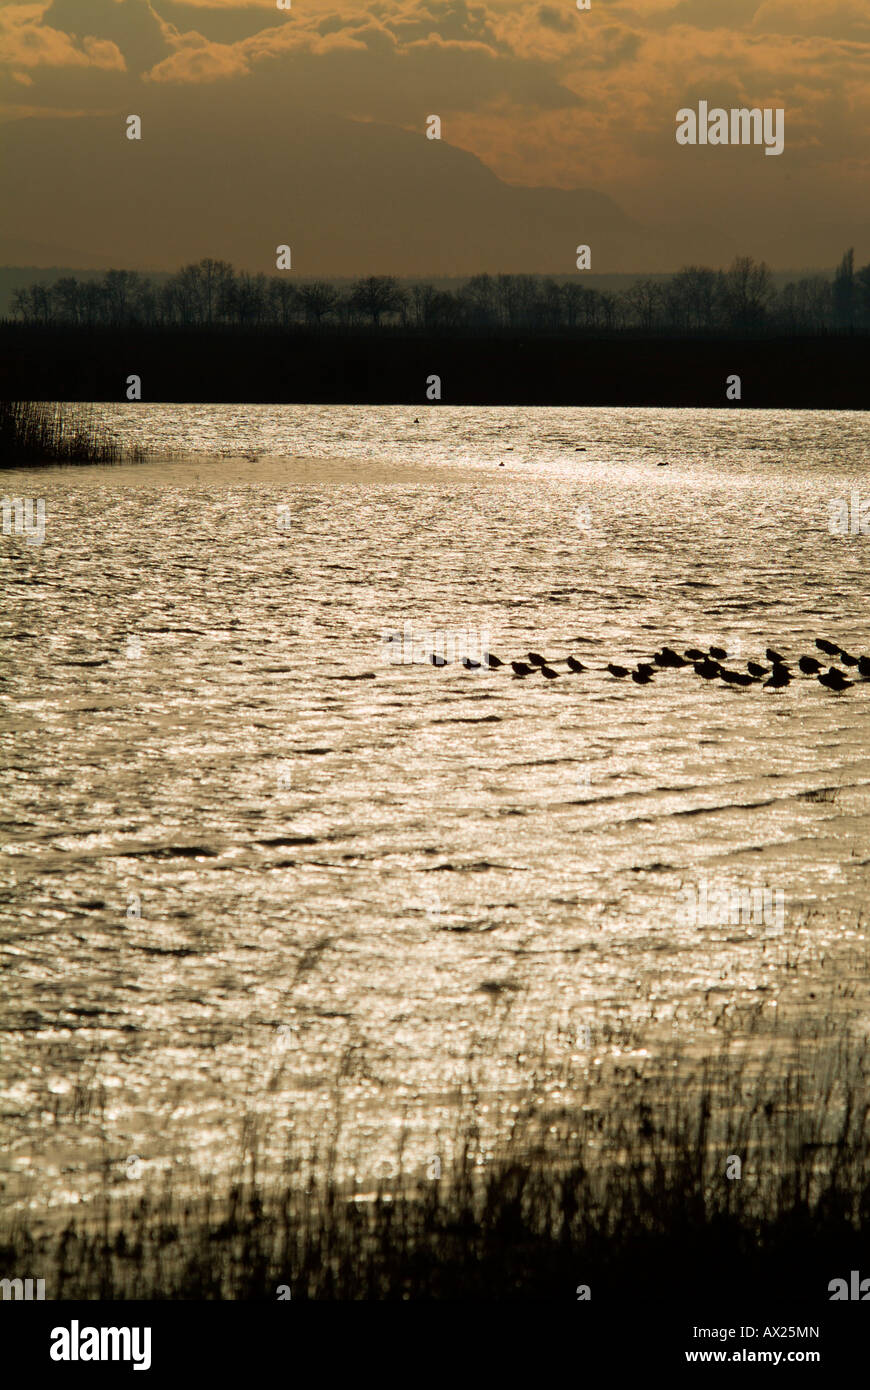 Evening mood, sea birds near the water's edge, Warmsee (Warm Lake), Illmitz, Burgenland, Austria, Europe Stock Photo